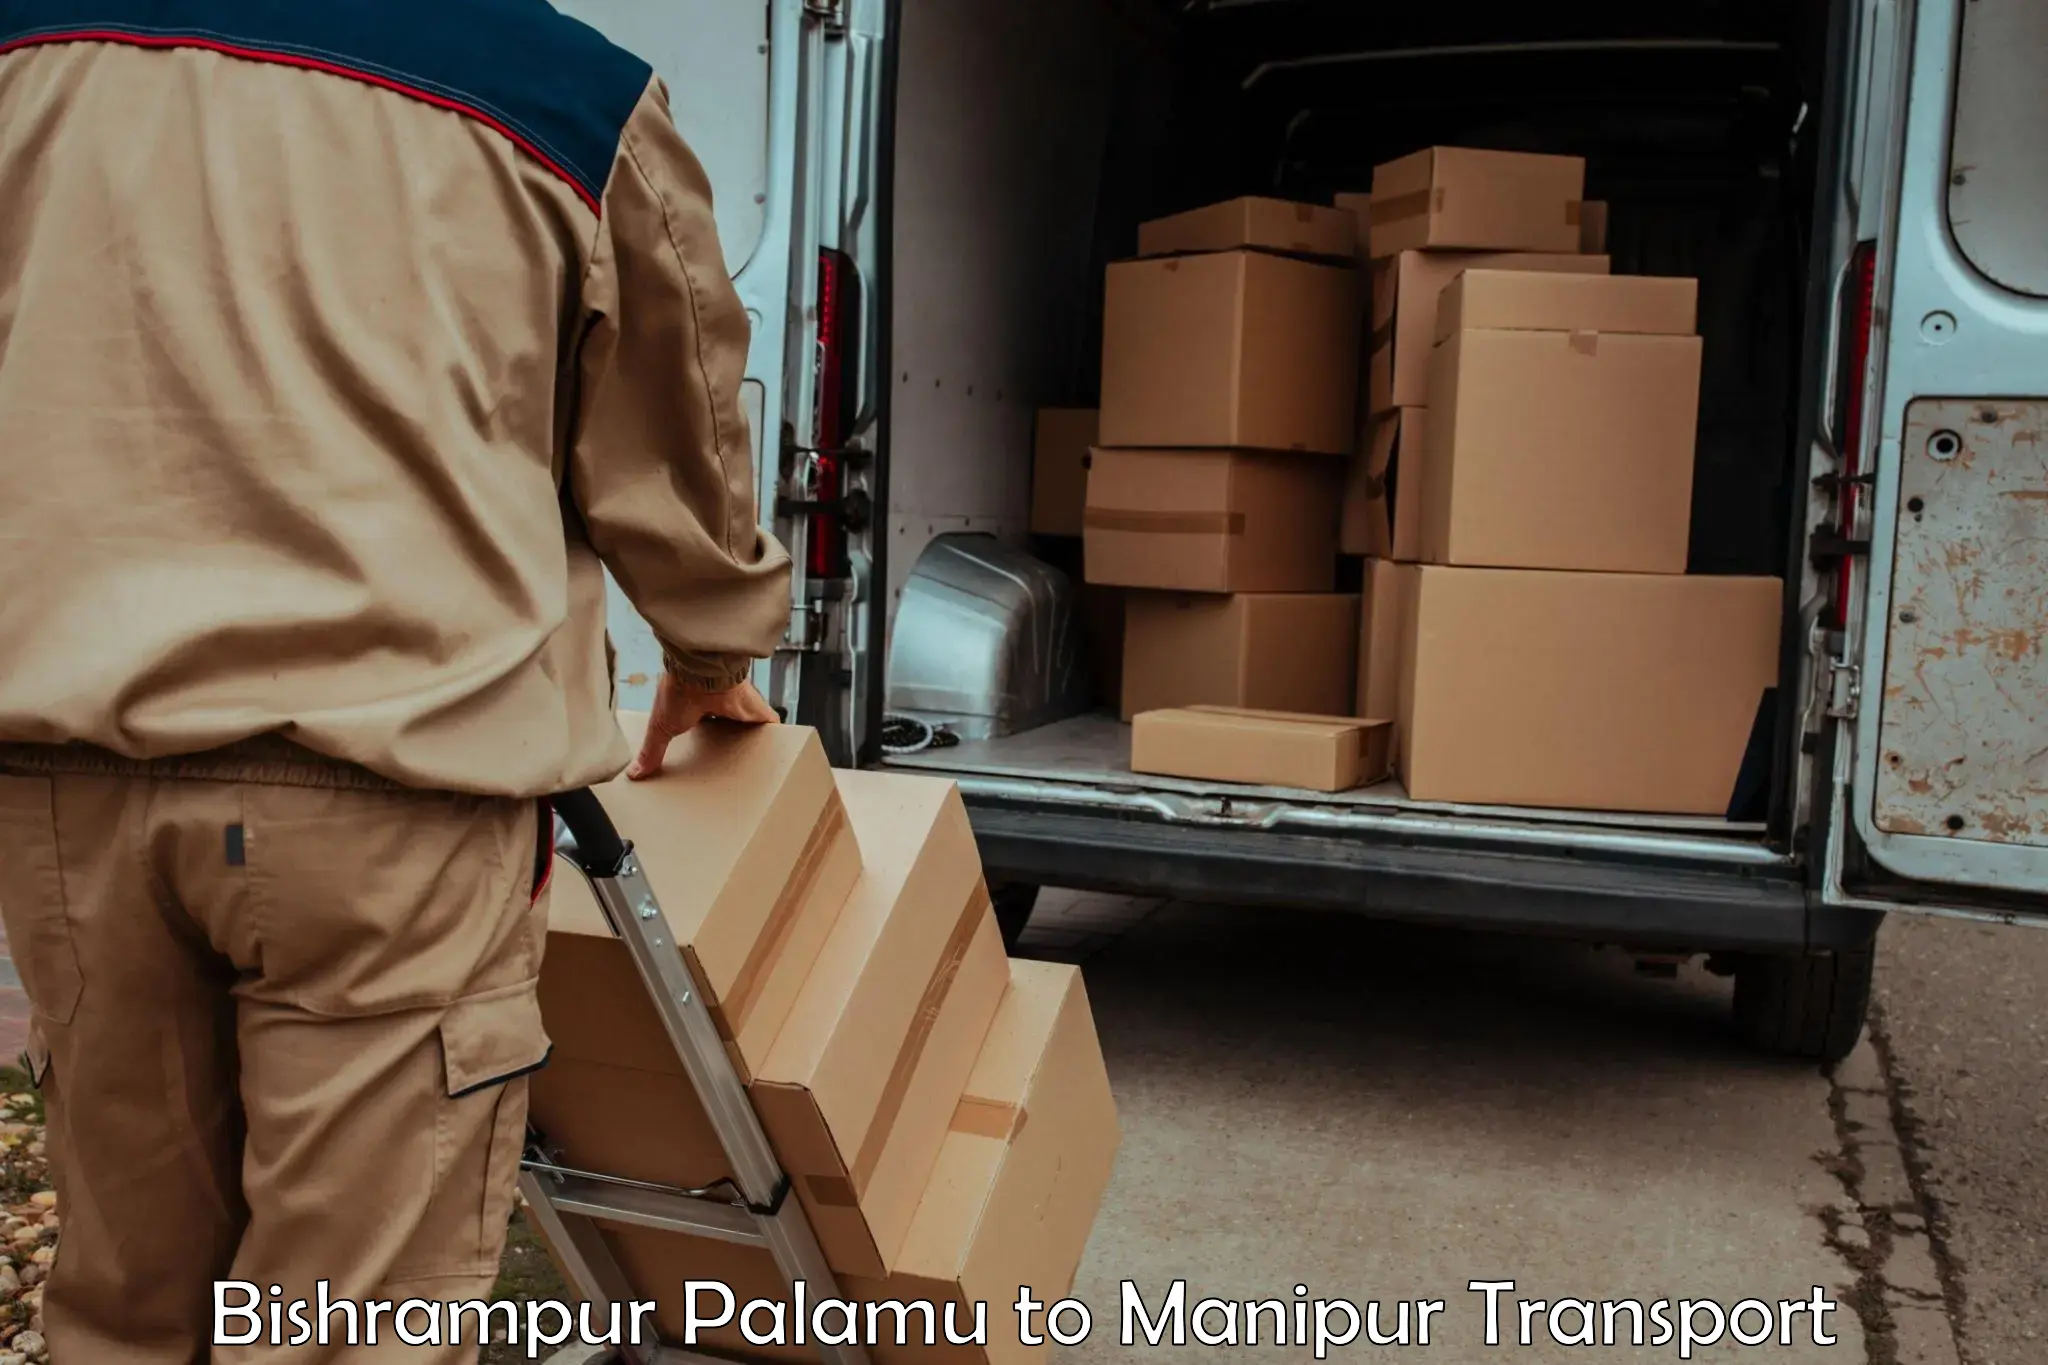 Truck transport companies in India Bishrampur Palamu to Thoubal